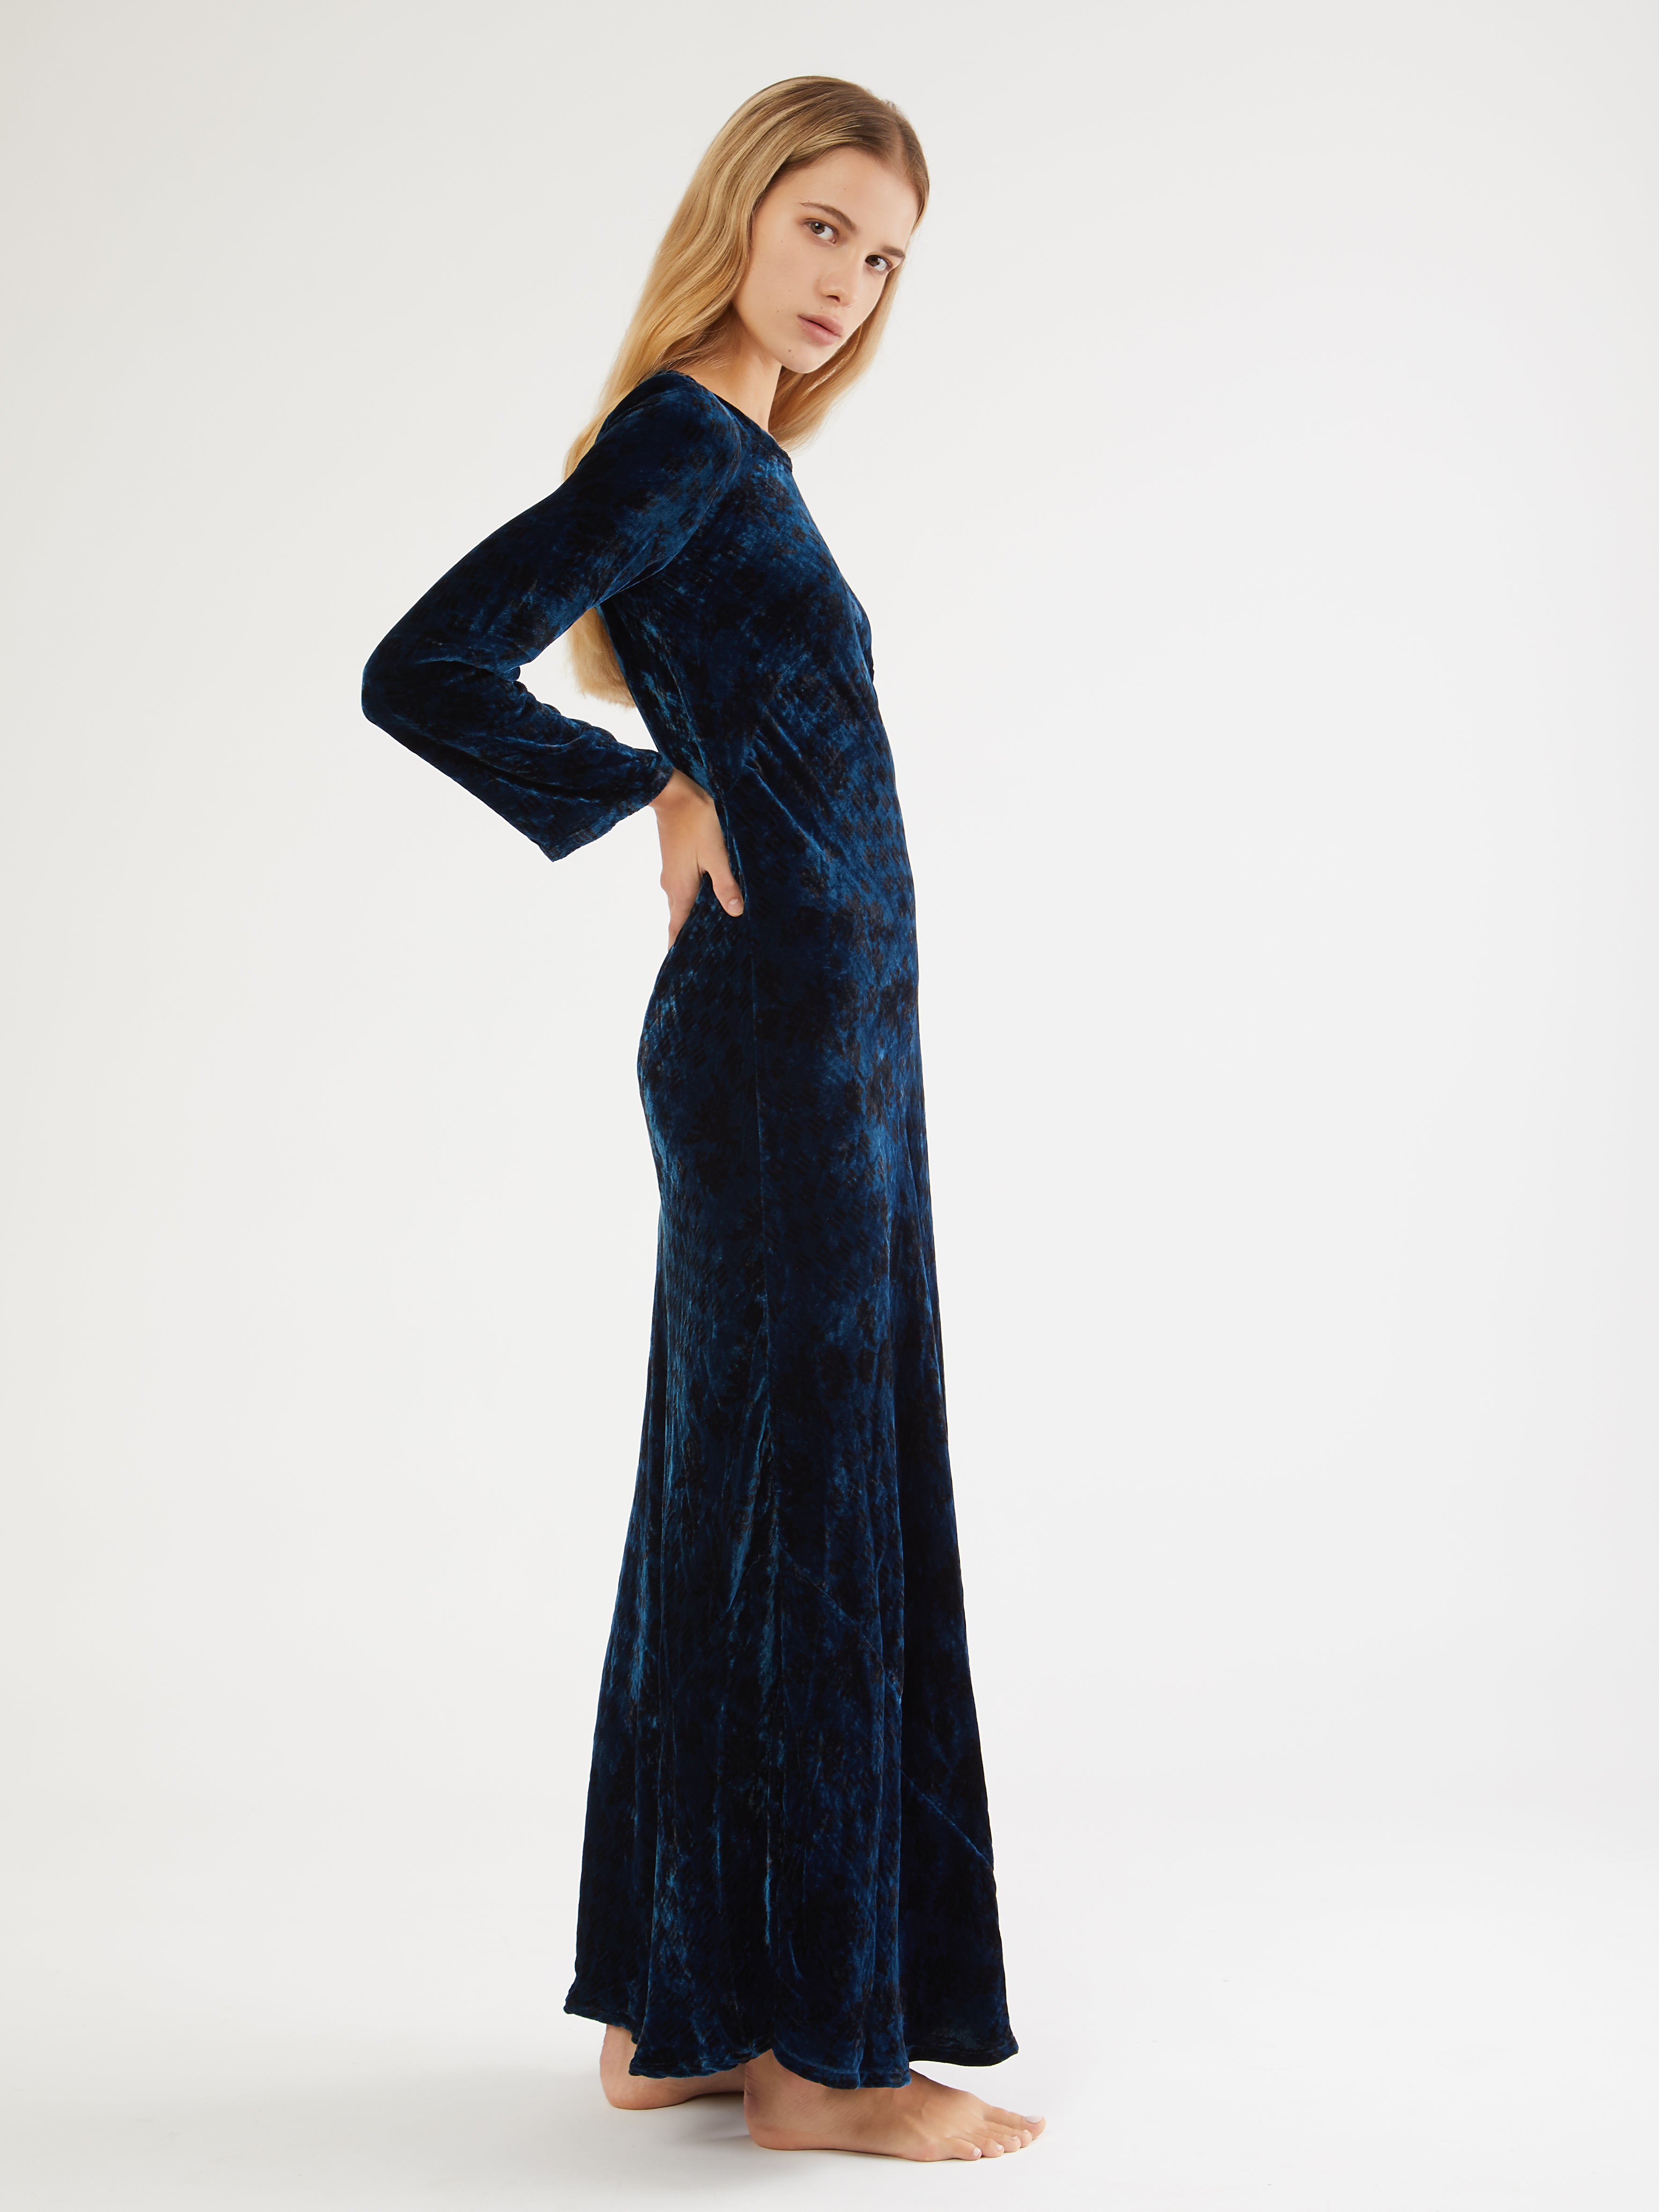 340+ Velvet Gown Stock Photos, Pictures & Royalty-Free Images - iStock | Velvet  dress